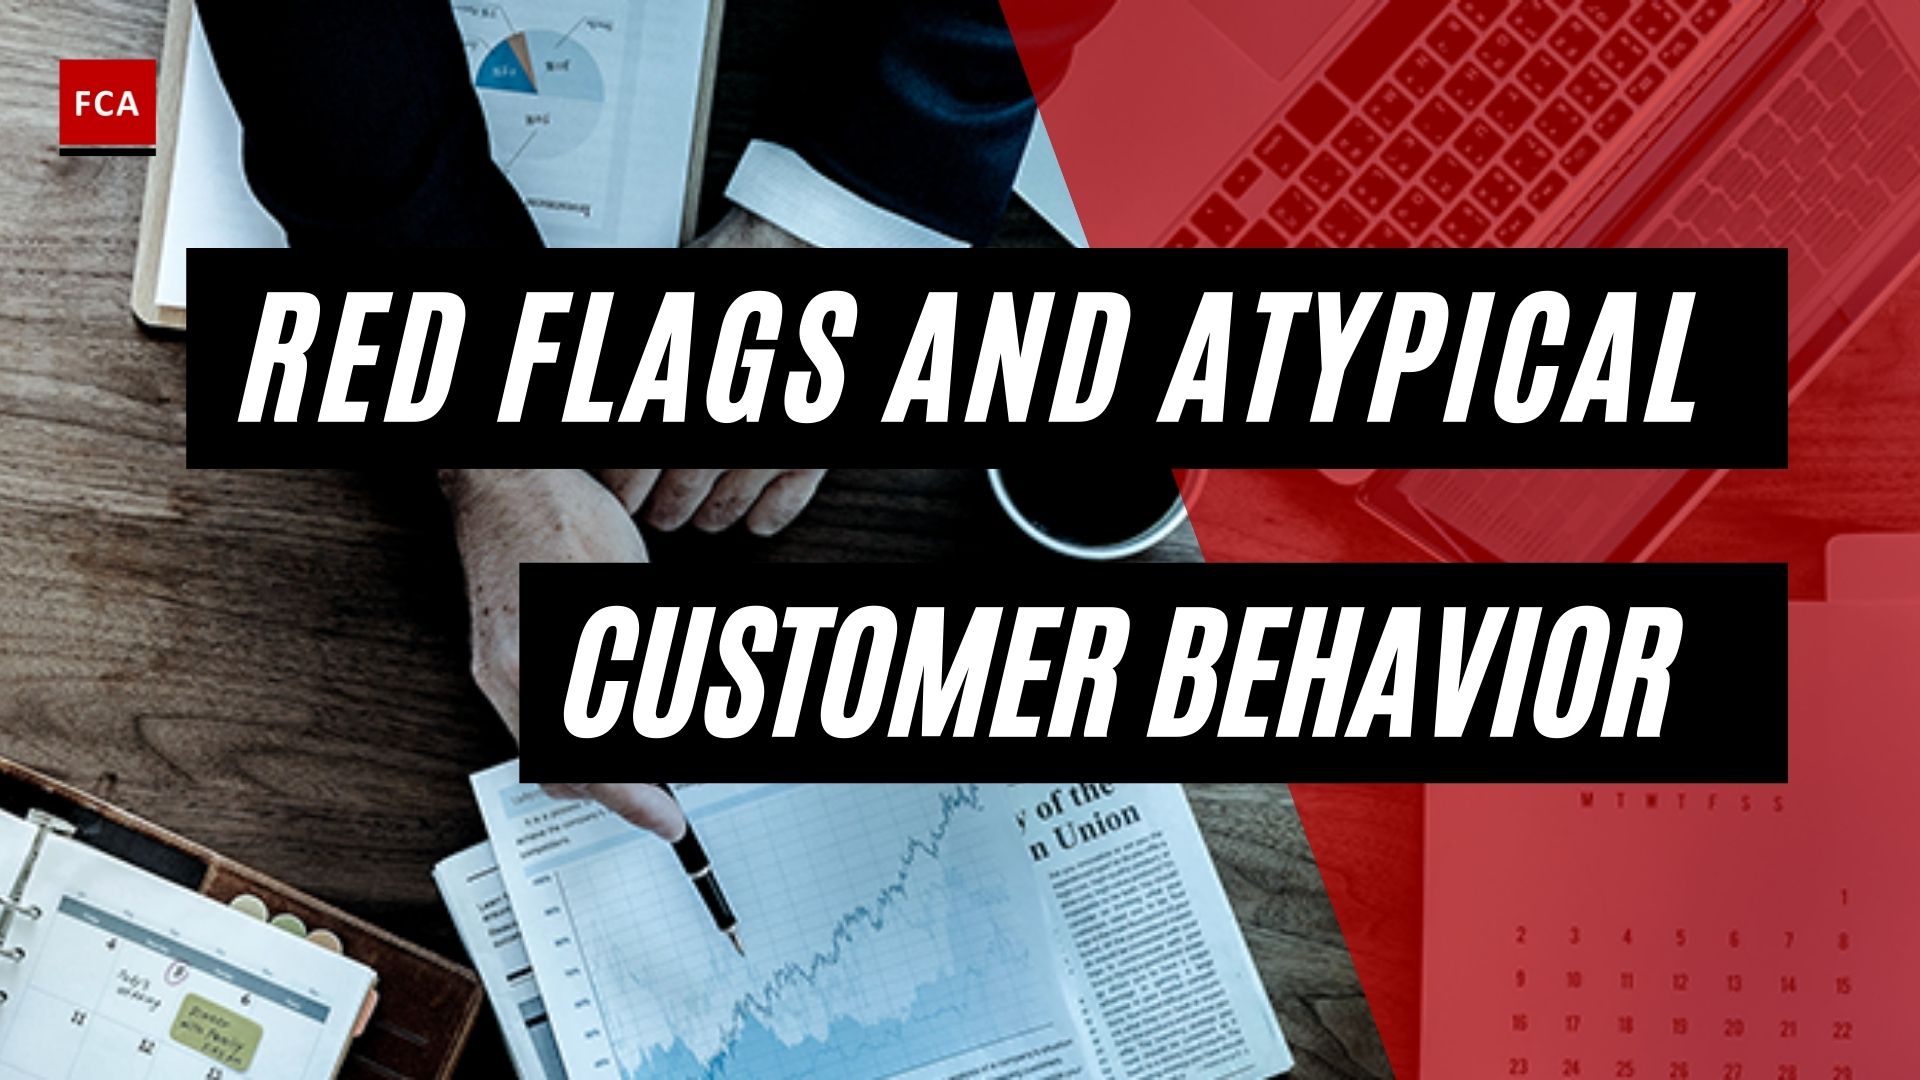 Atypical Customer Behavior